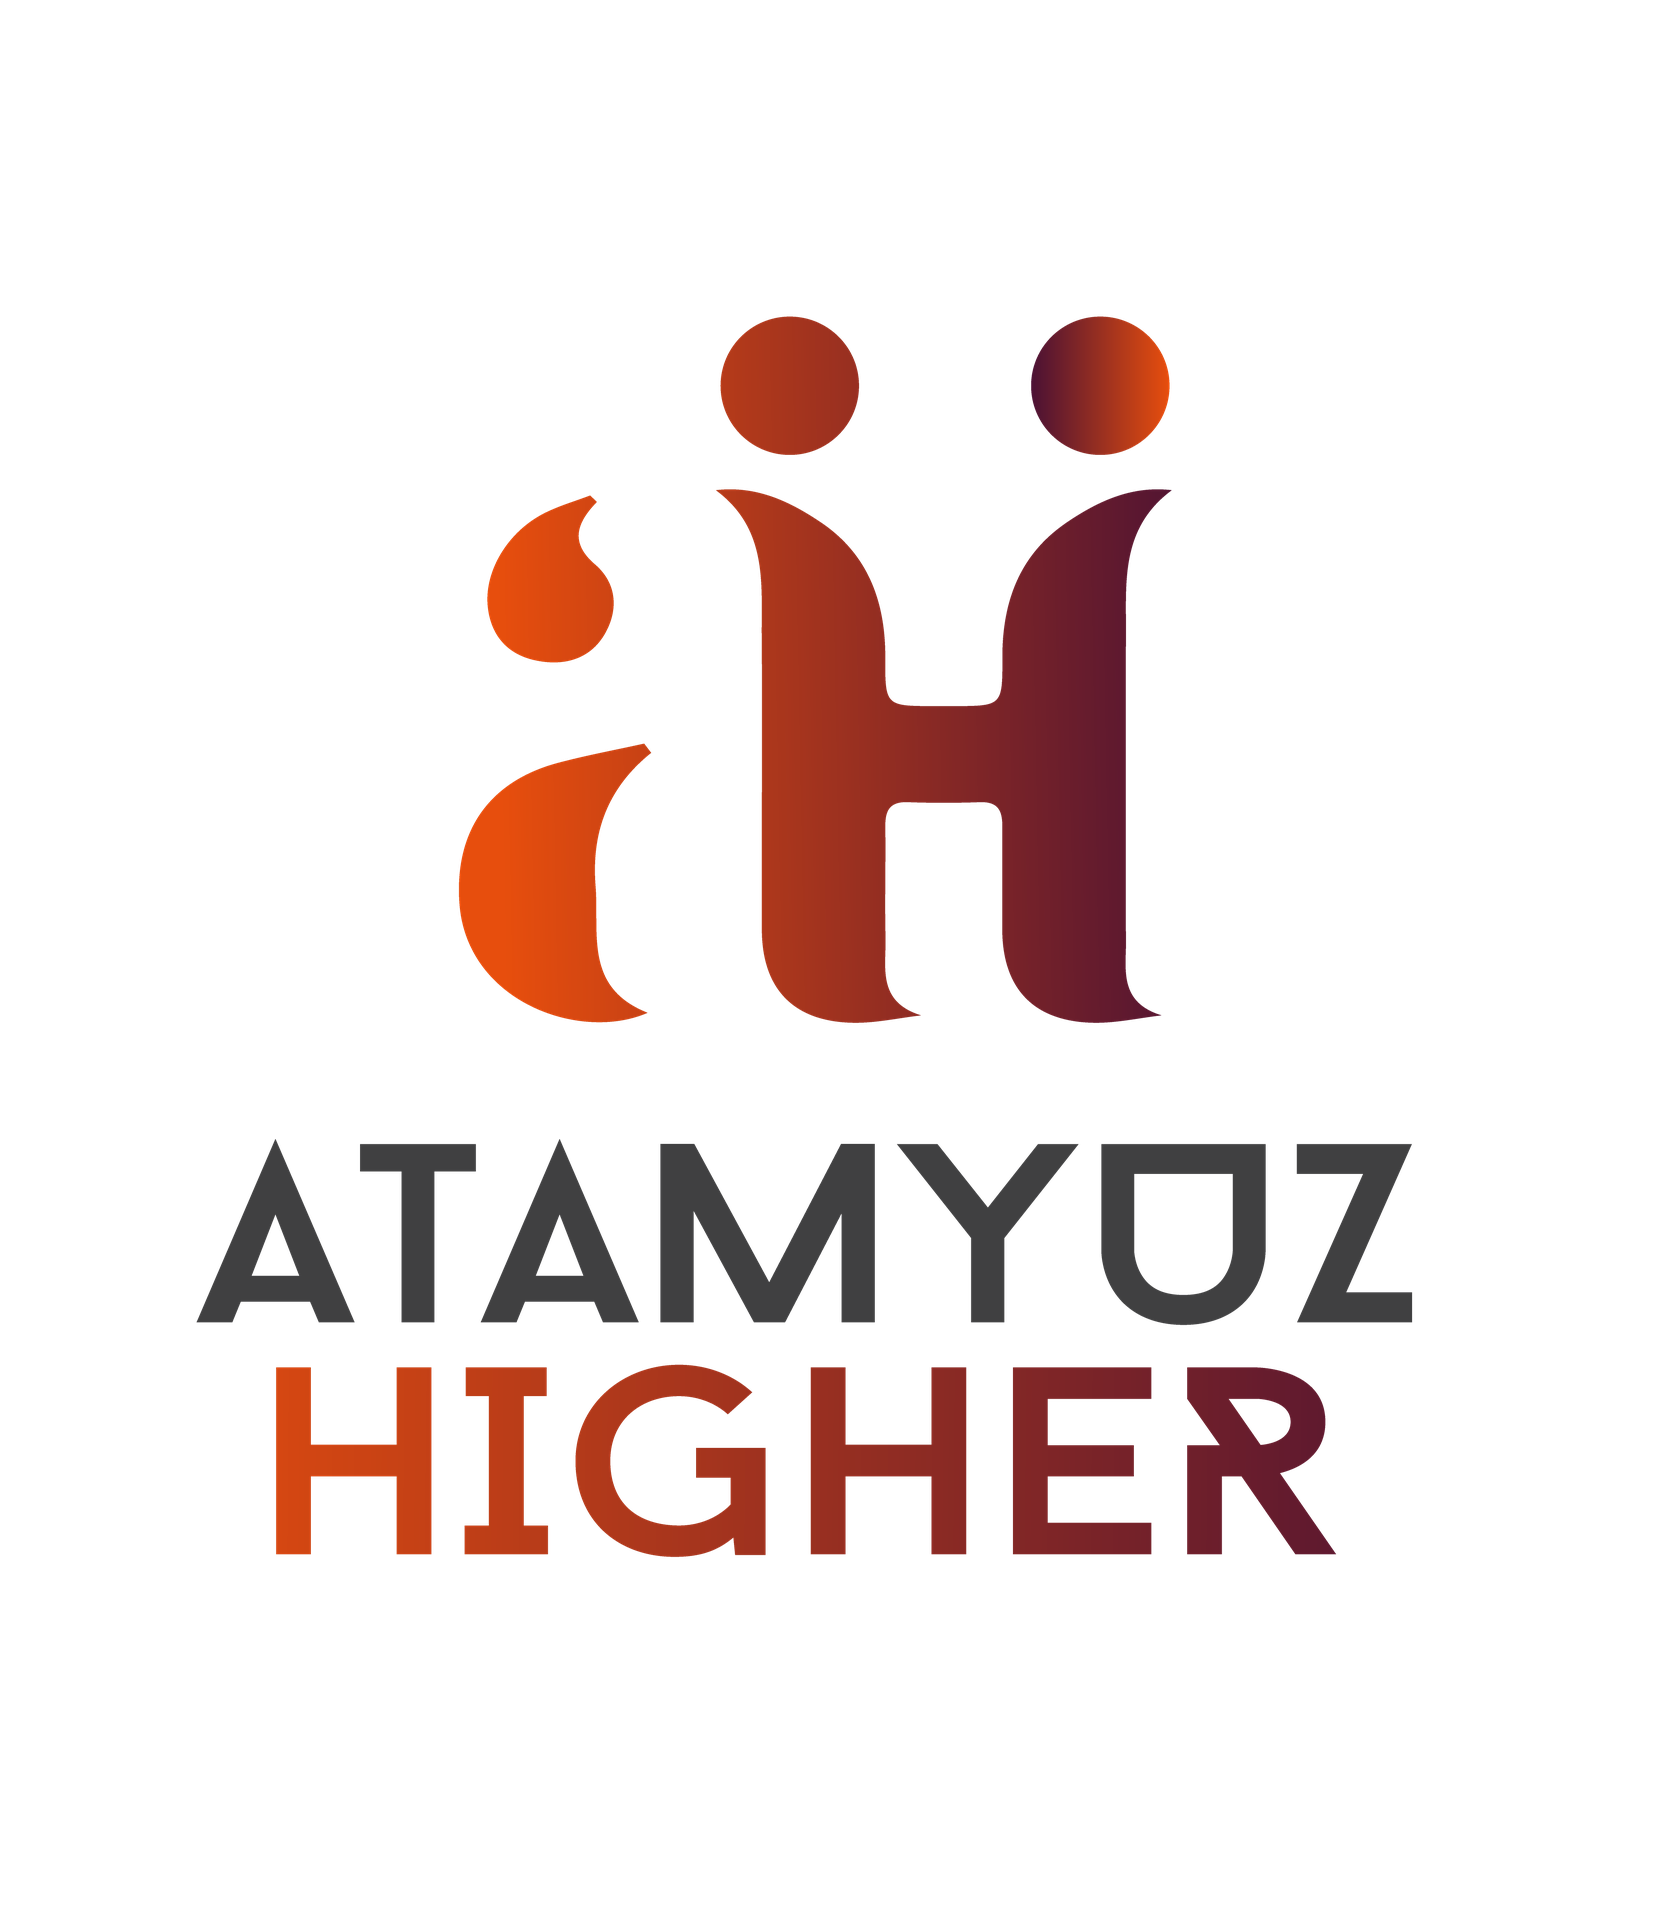 Higher Al Tamayuz